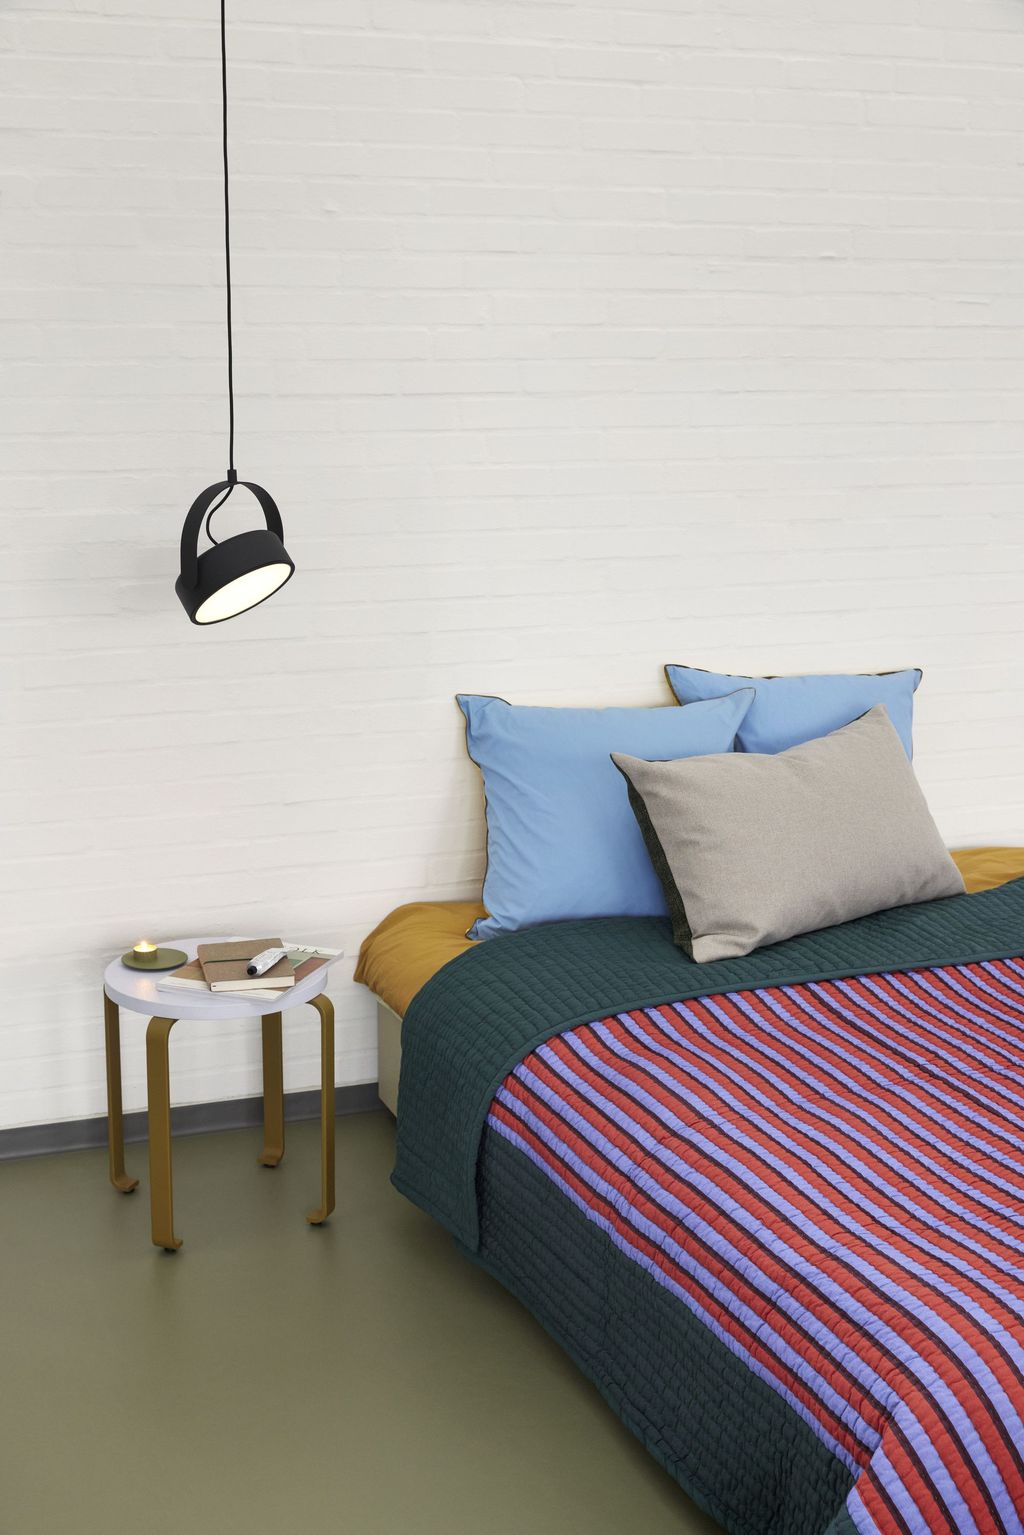 Hübsch Lampe à plafond LED de scène, bleu